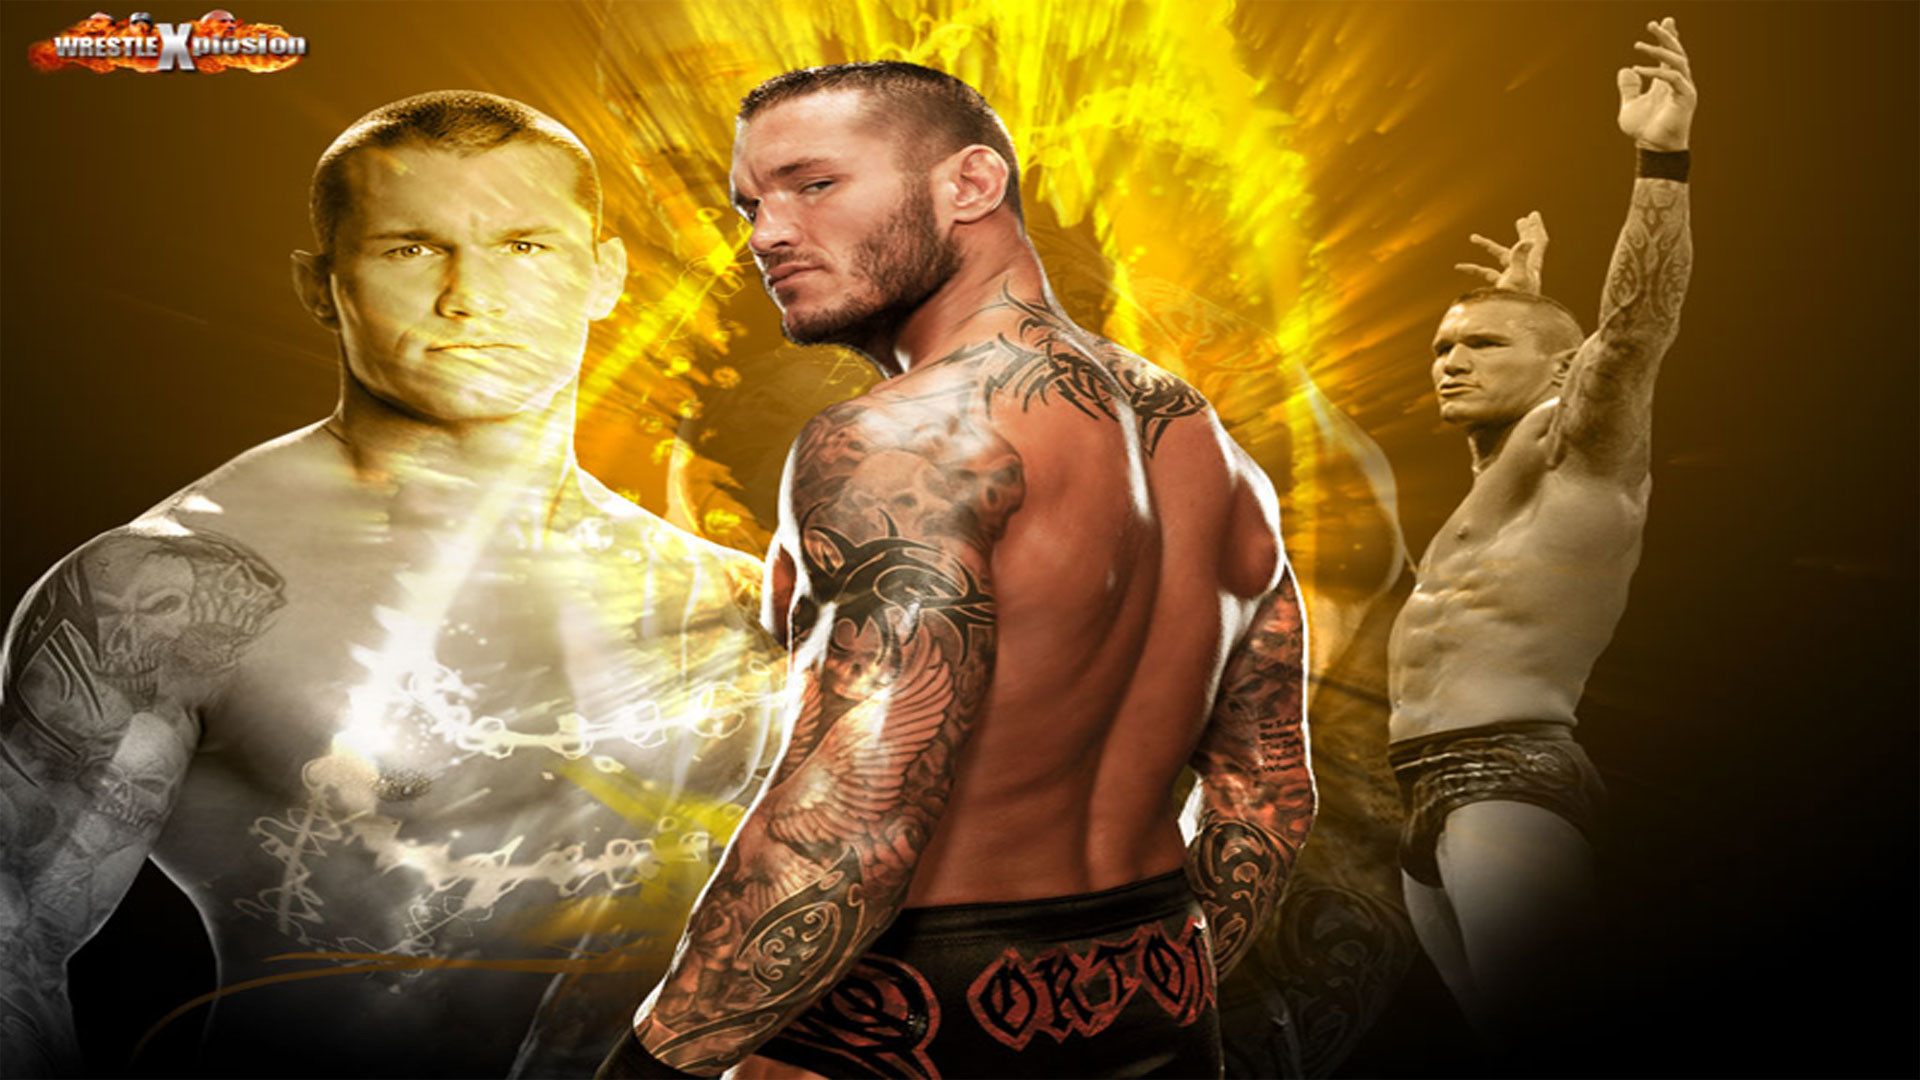 1920x1080 Randy Orton Hd Wallpapers Free Download | WWE HD WALLPAPER FREE .